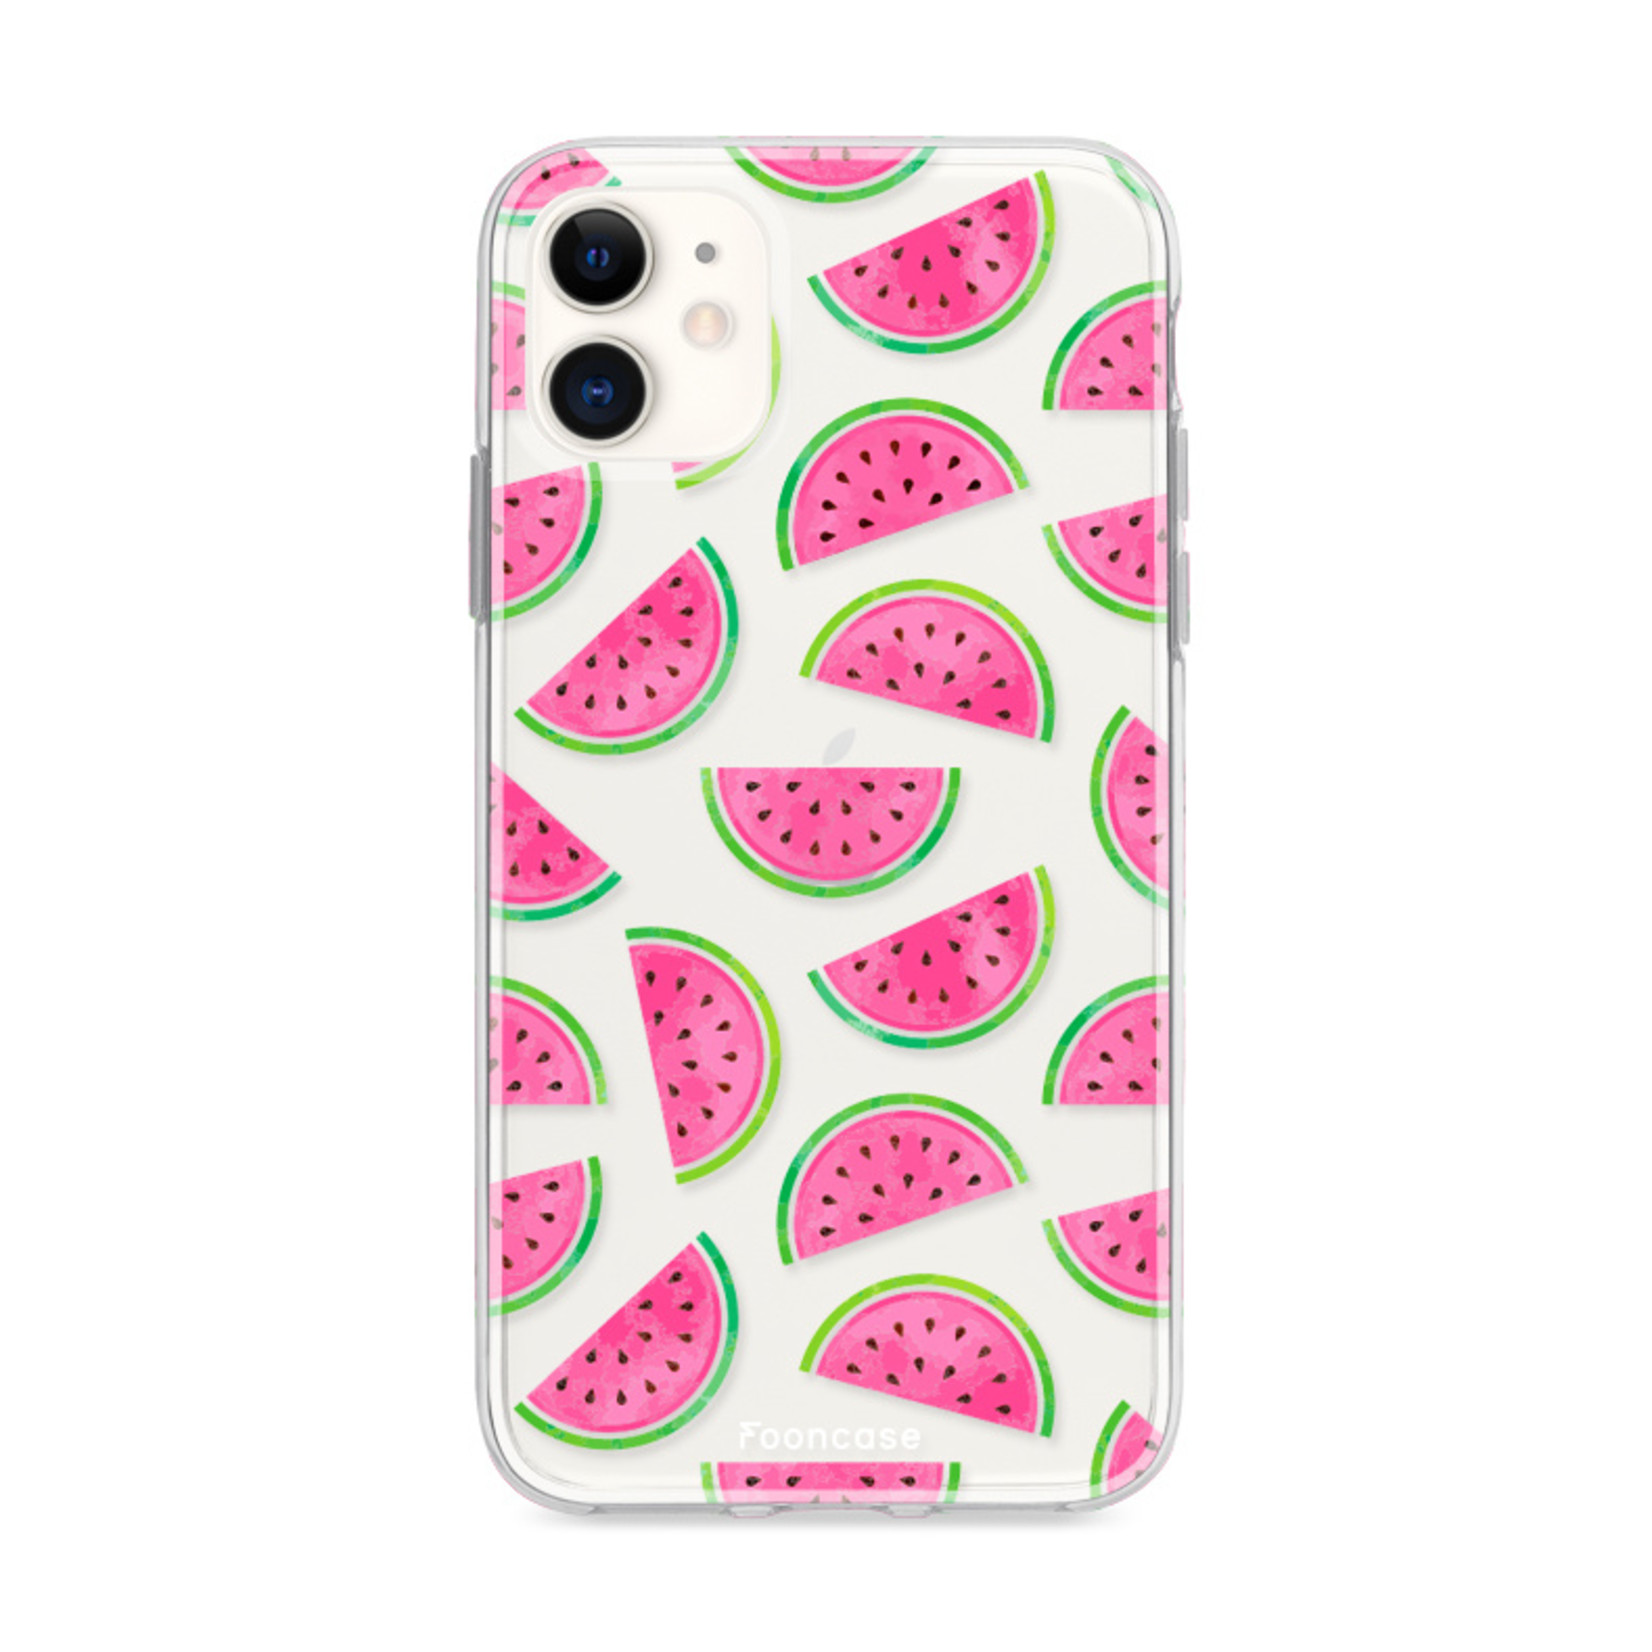 FOONCASE Iphone 11 Case - Watermelon